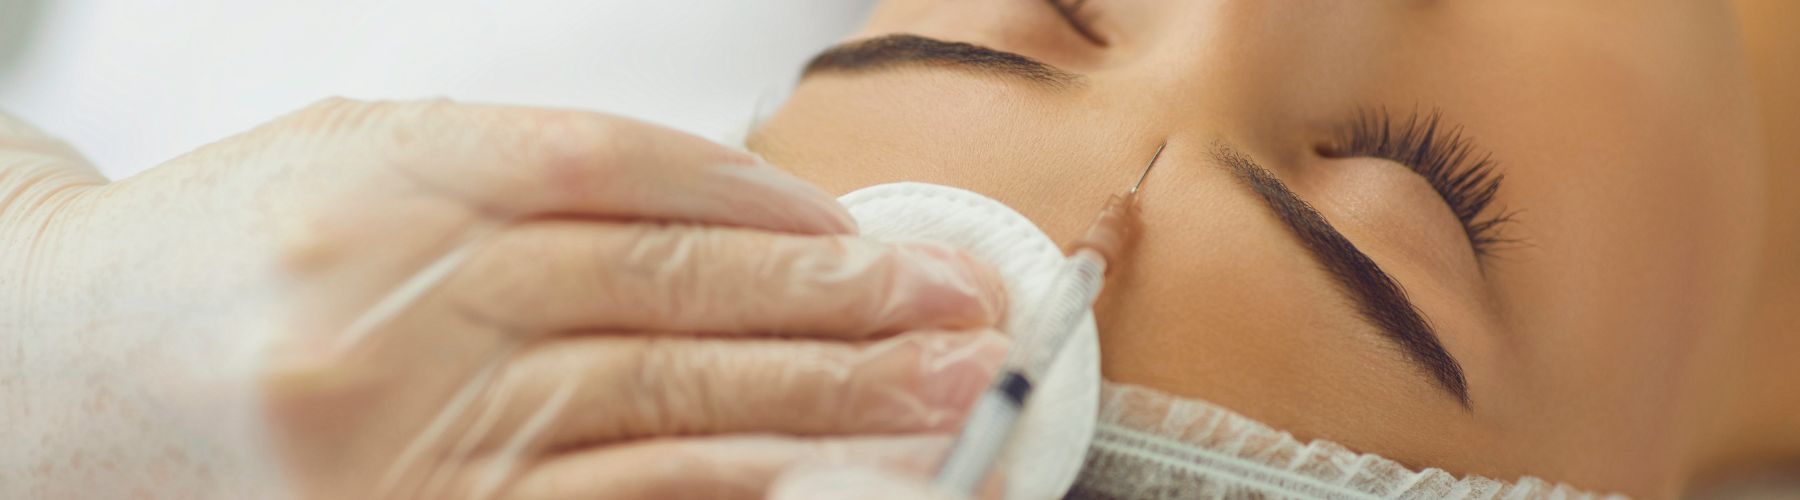 How Often Should You Top Up Botox?